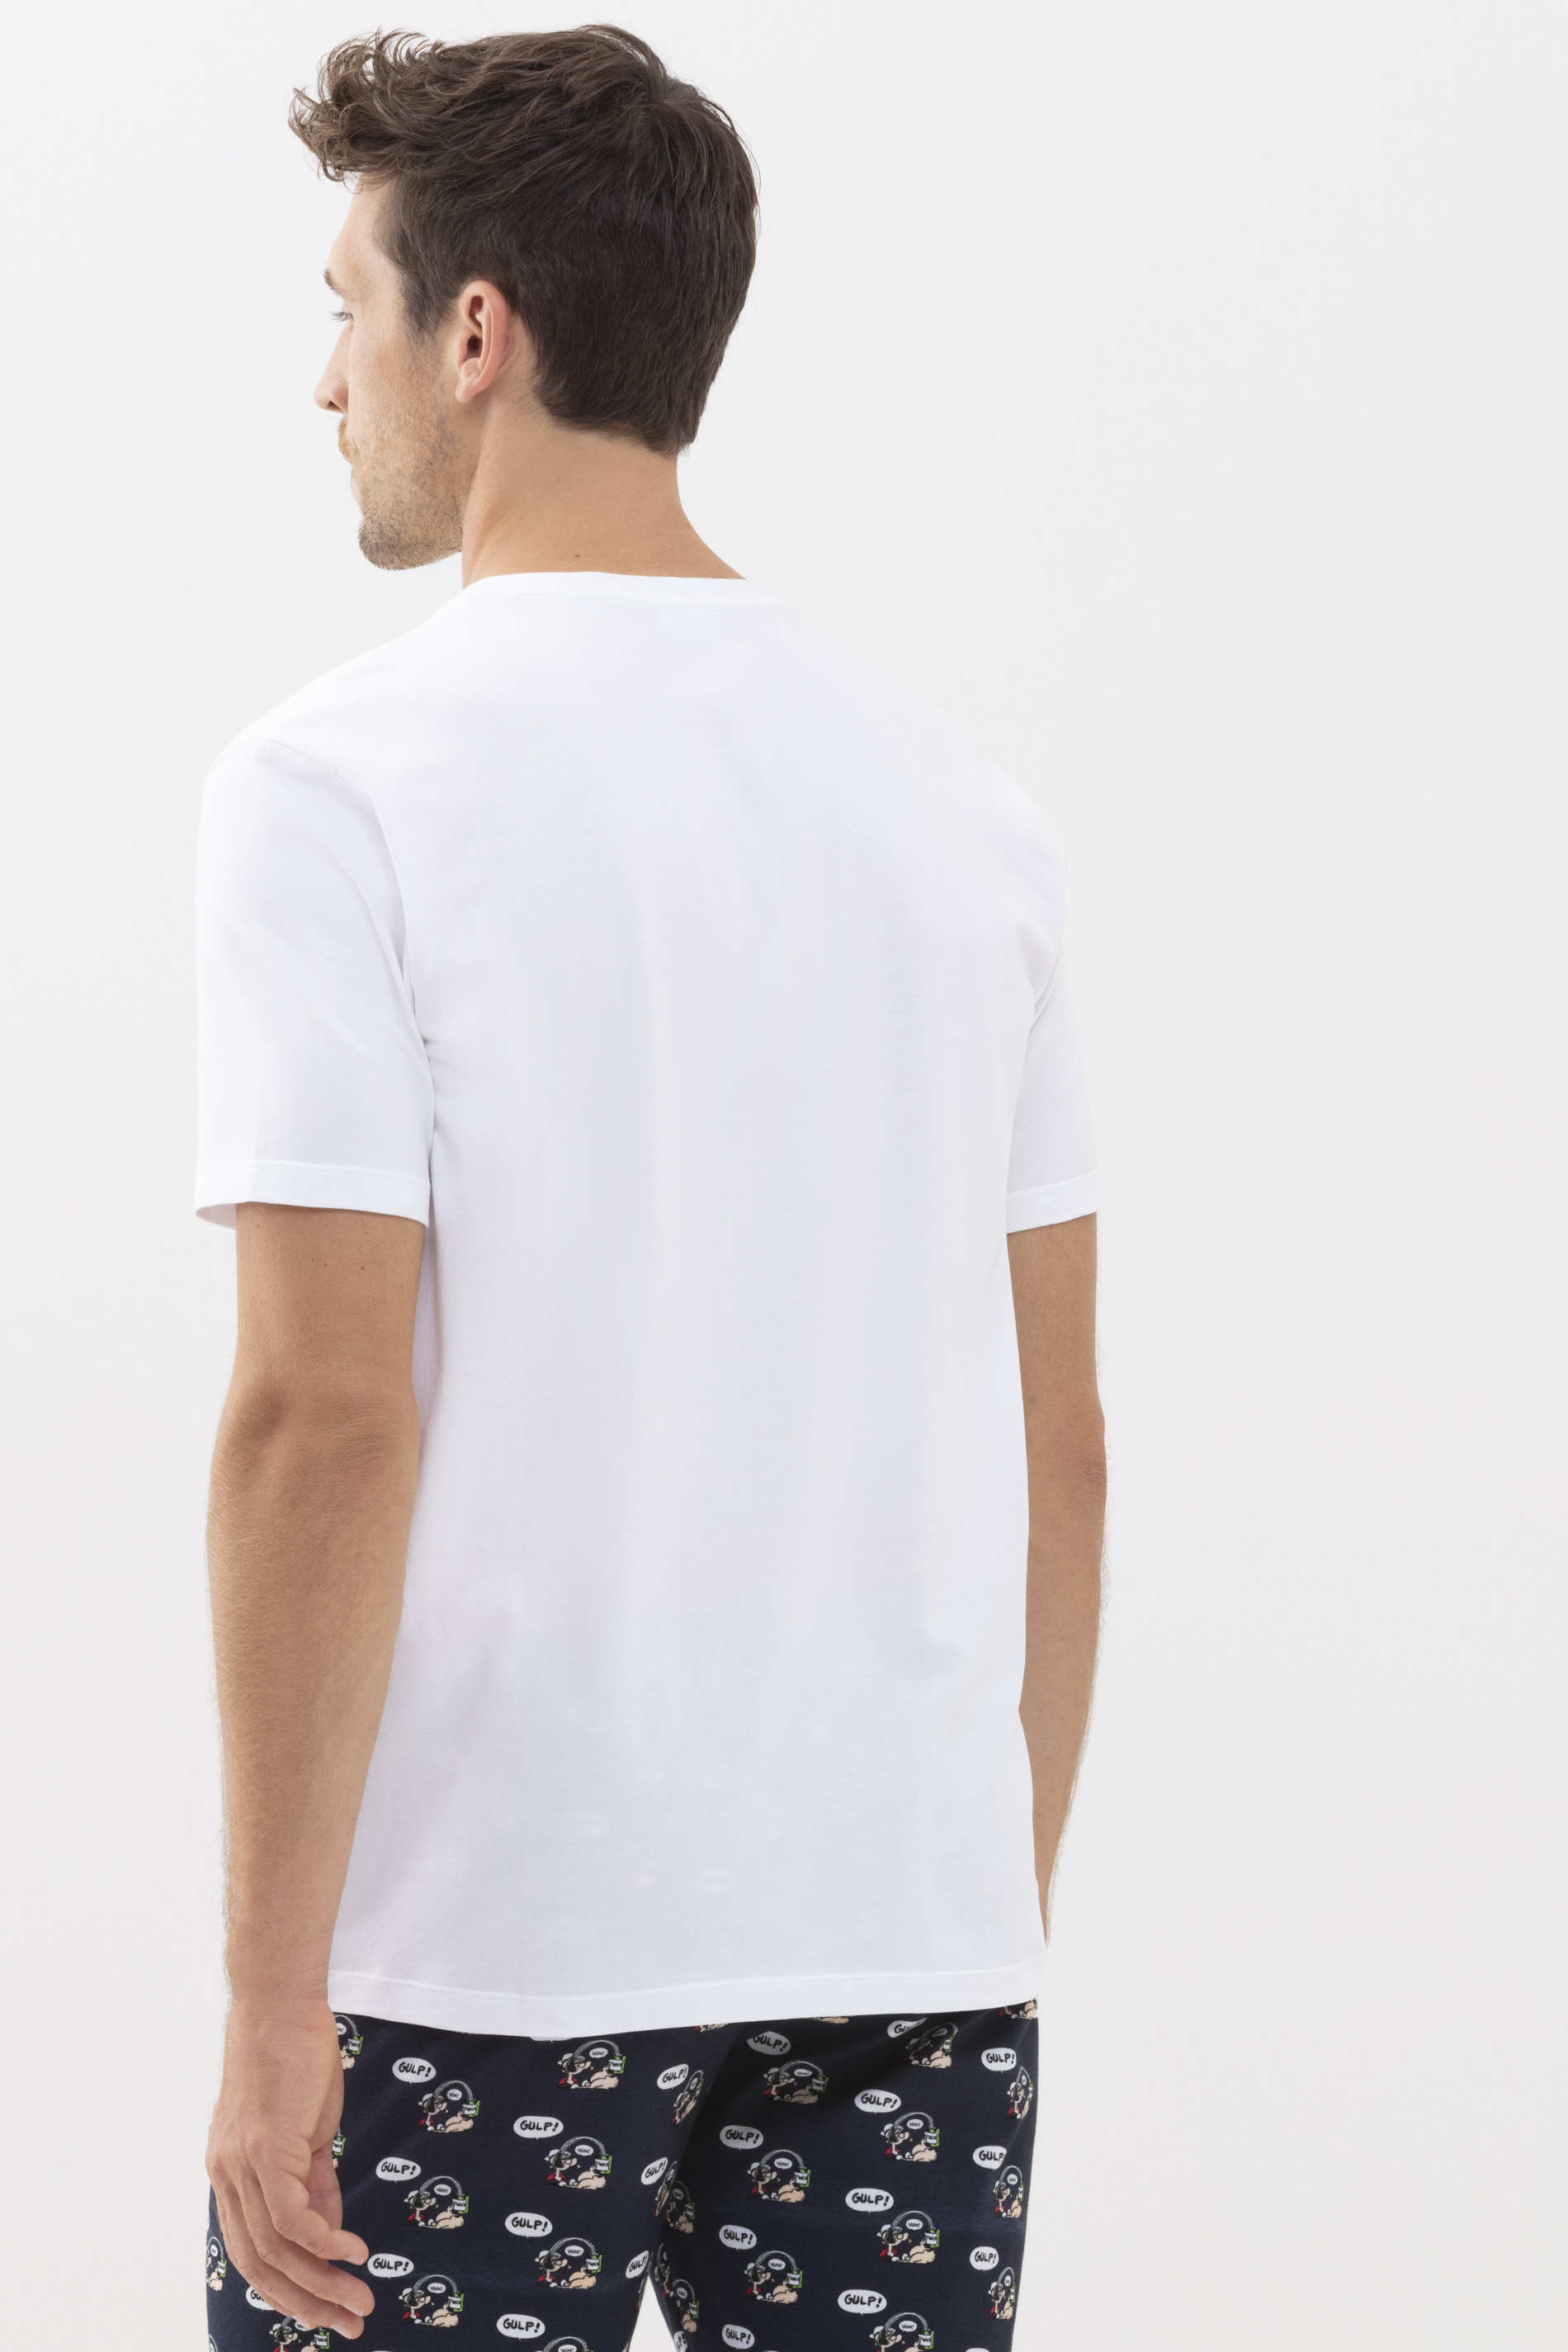 T-shirt White Serie POPEYE©xMEY Rear View | mey®